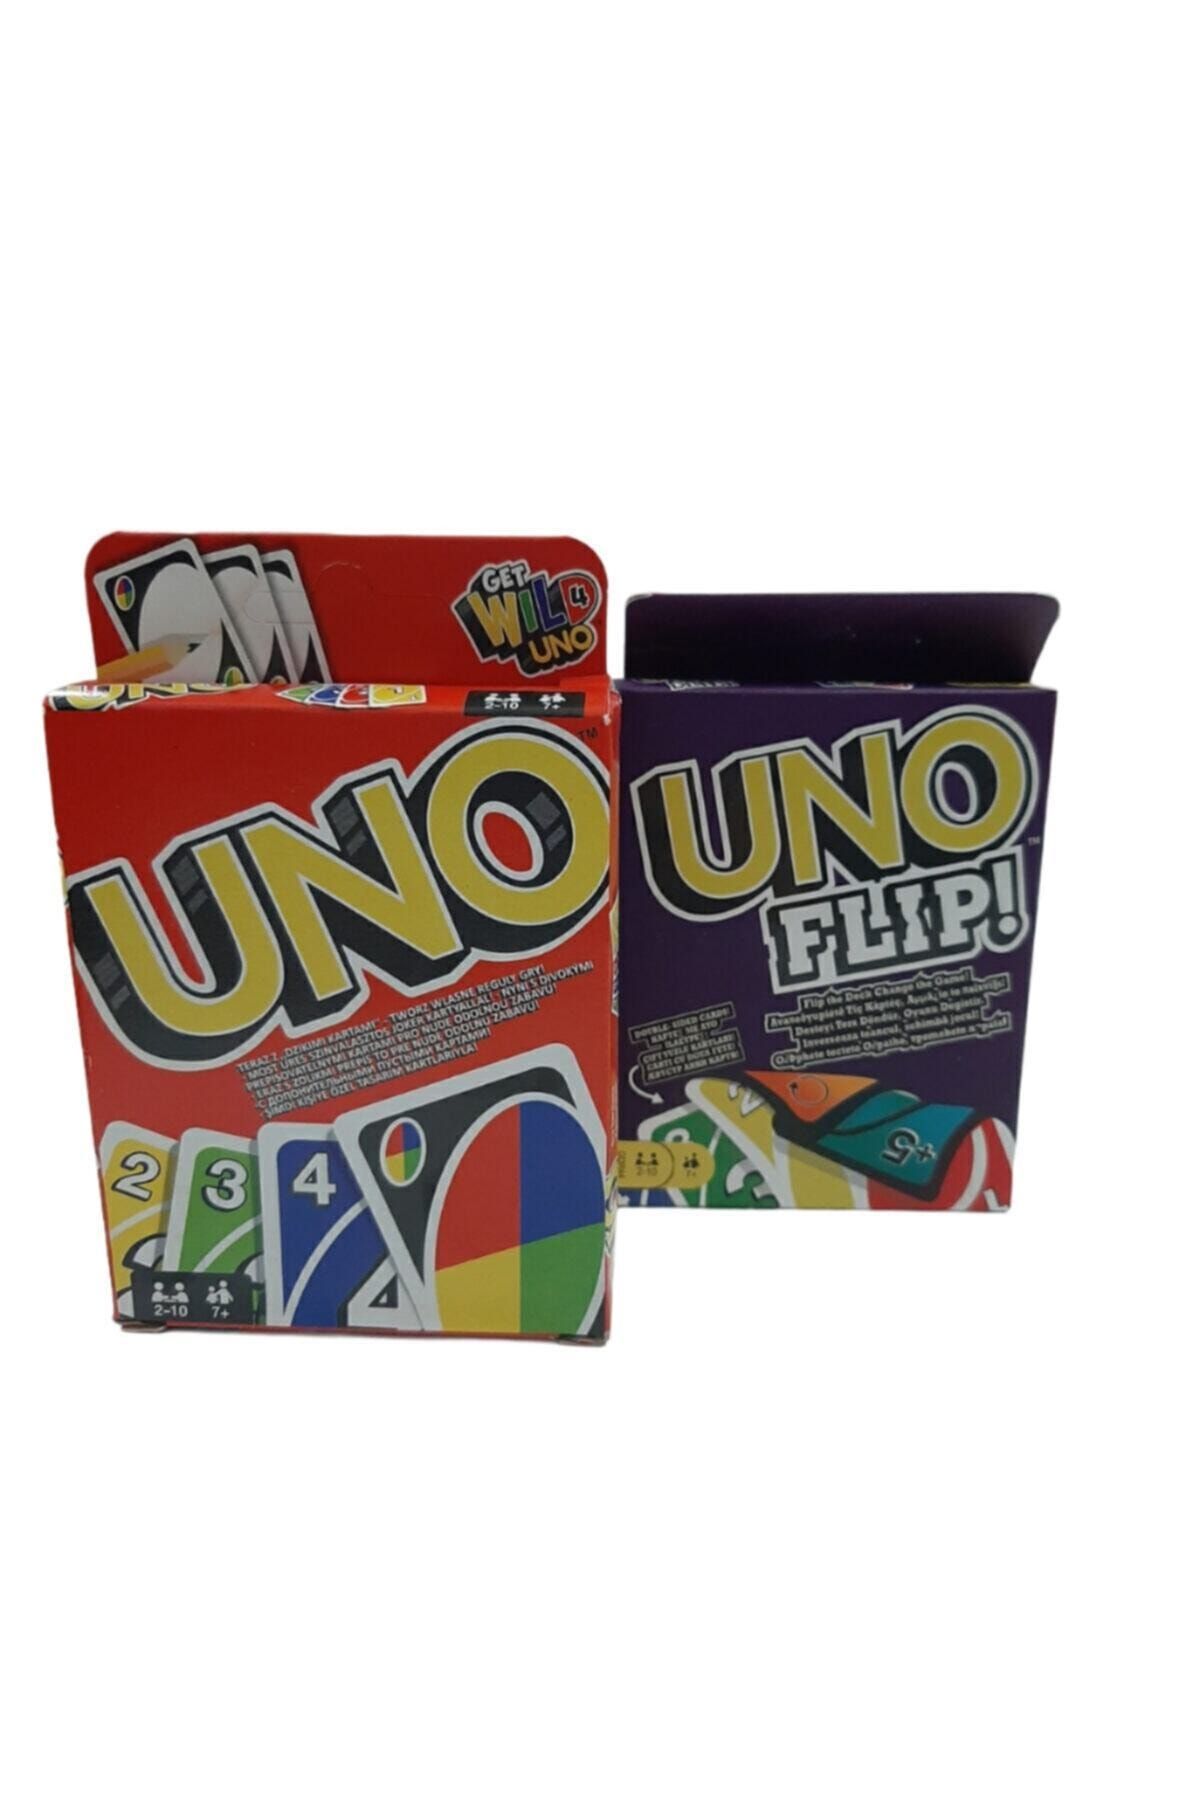 UNO Uno Oyun Kartı Ve Uno Flip Oyun Kartı